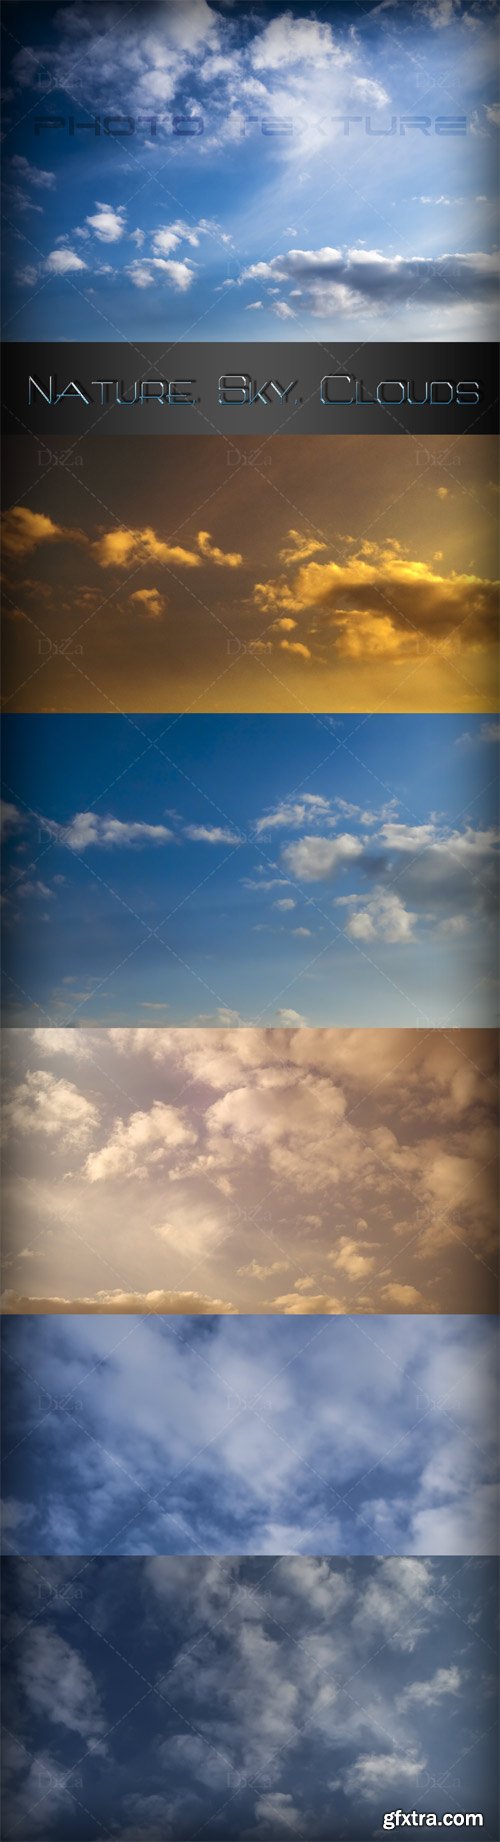 Photo texture - Nature. Sky. Clouds